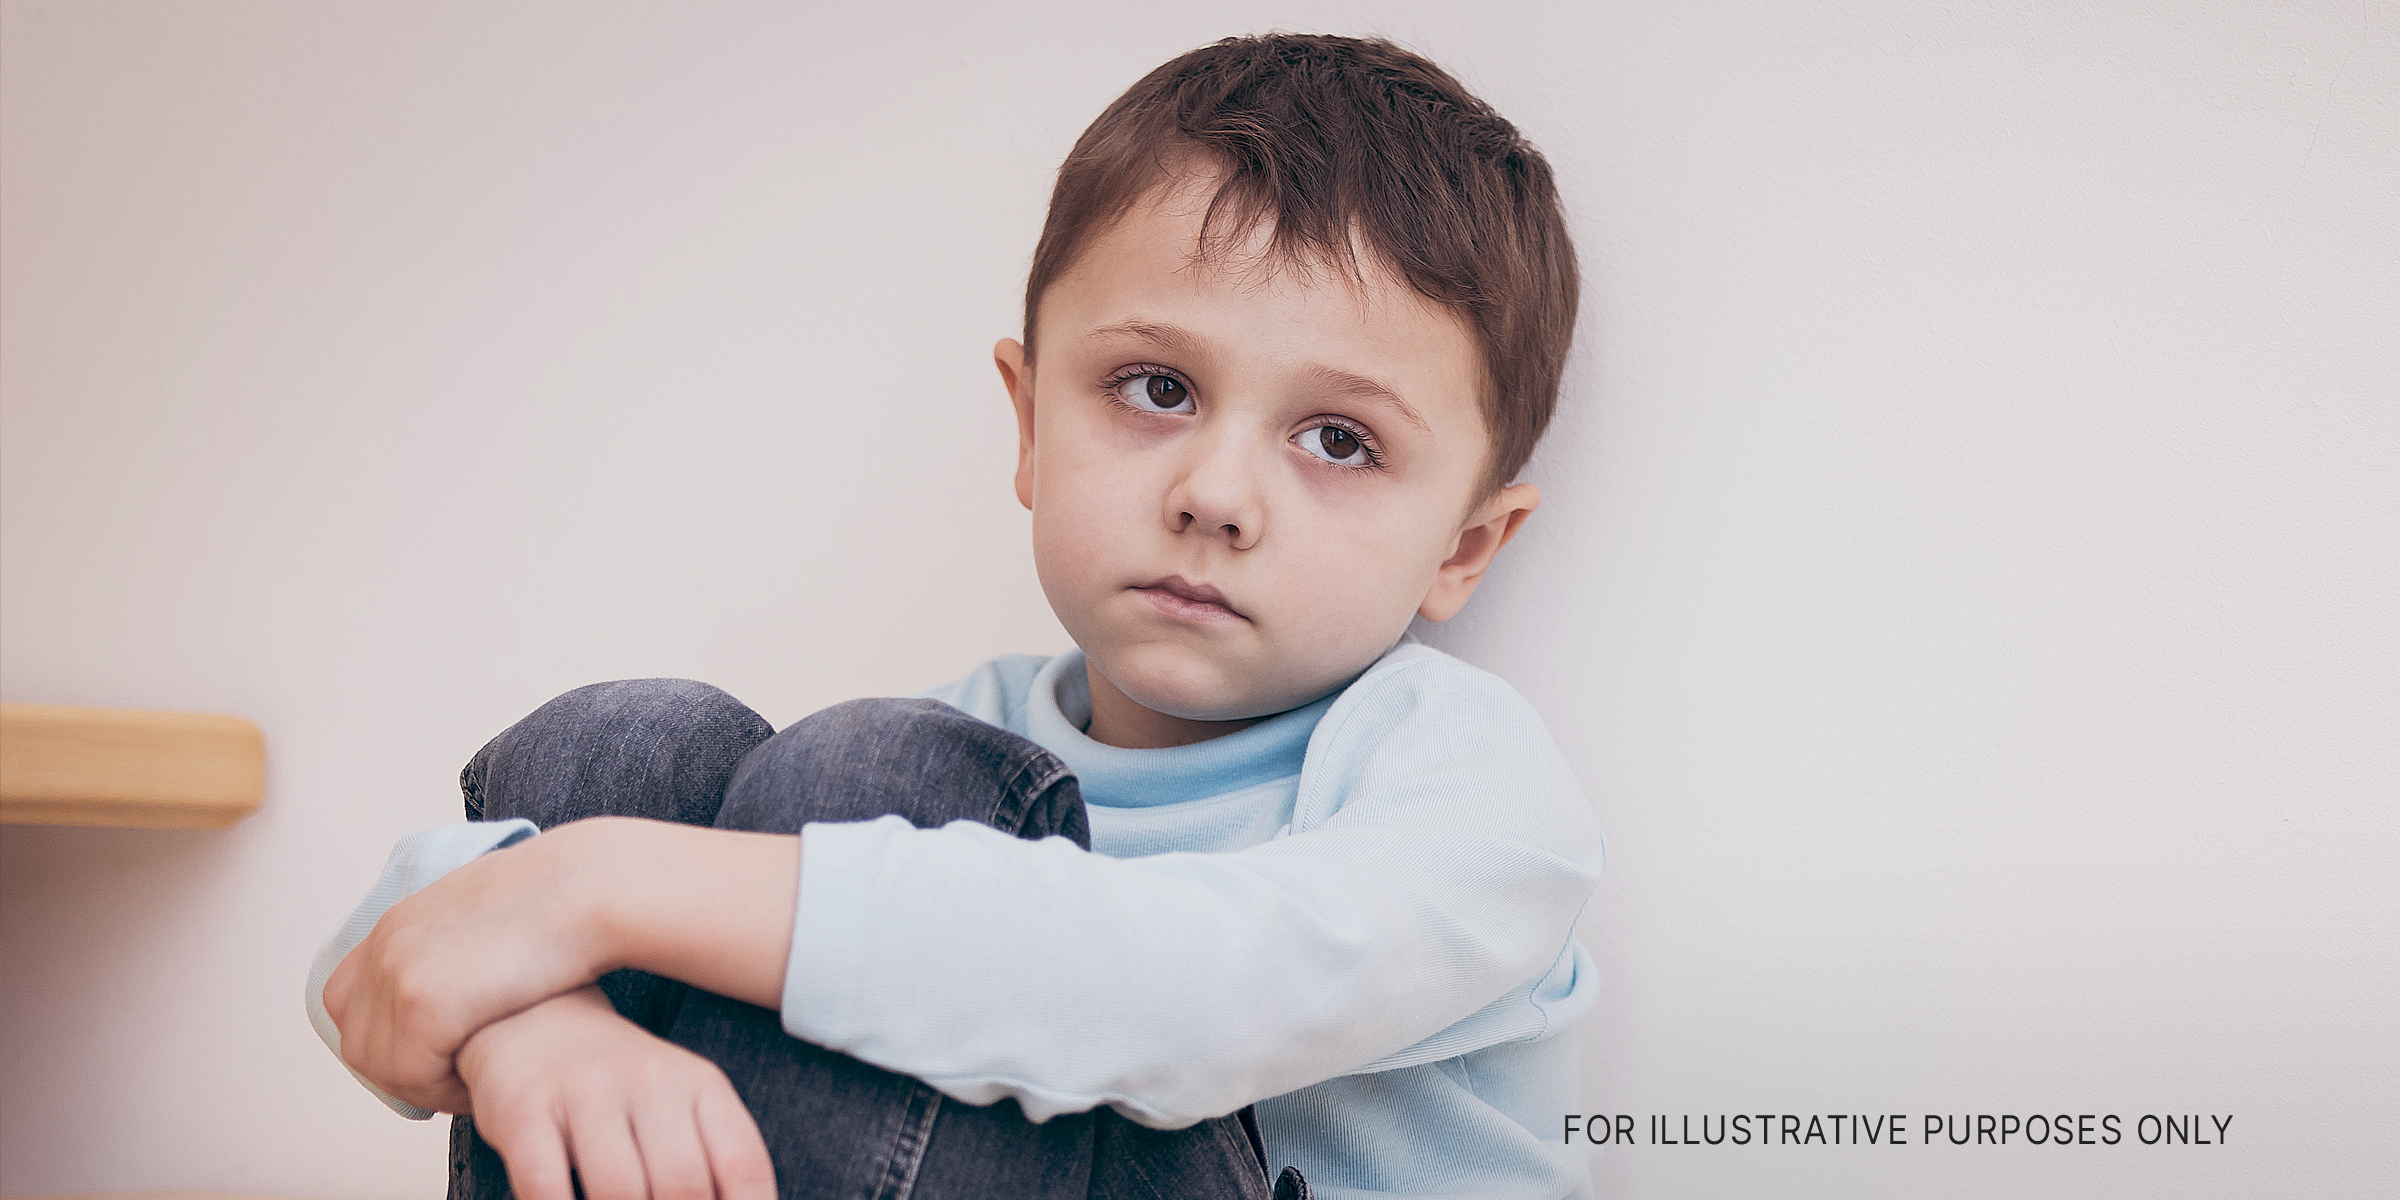 Sad little boy | Source: Shutterstock